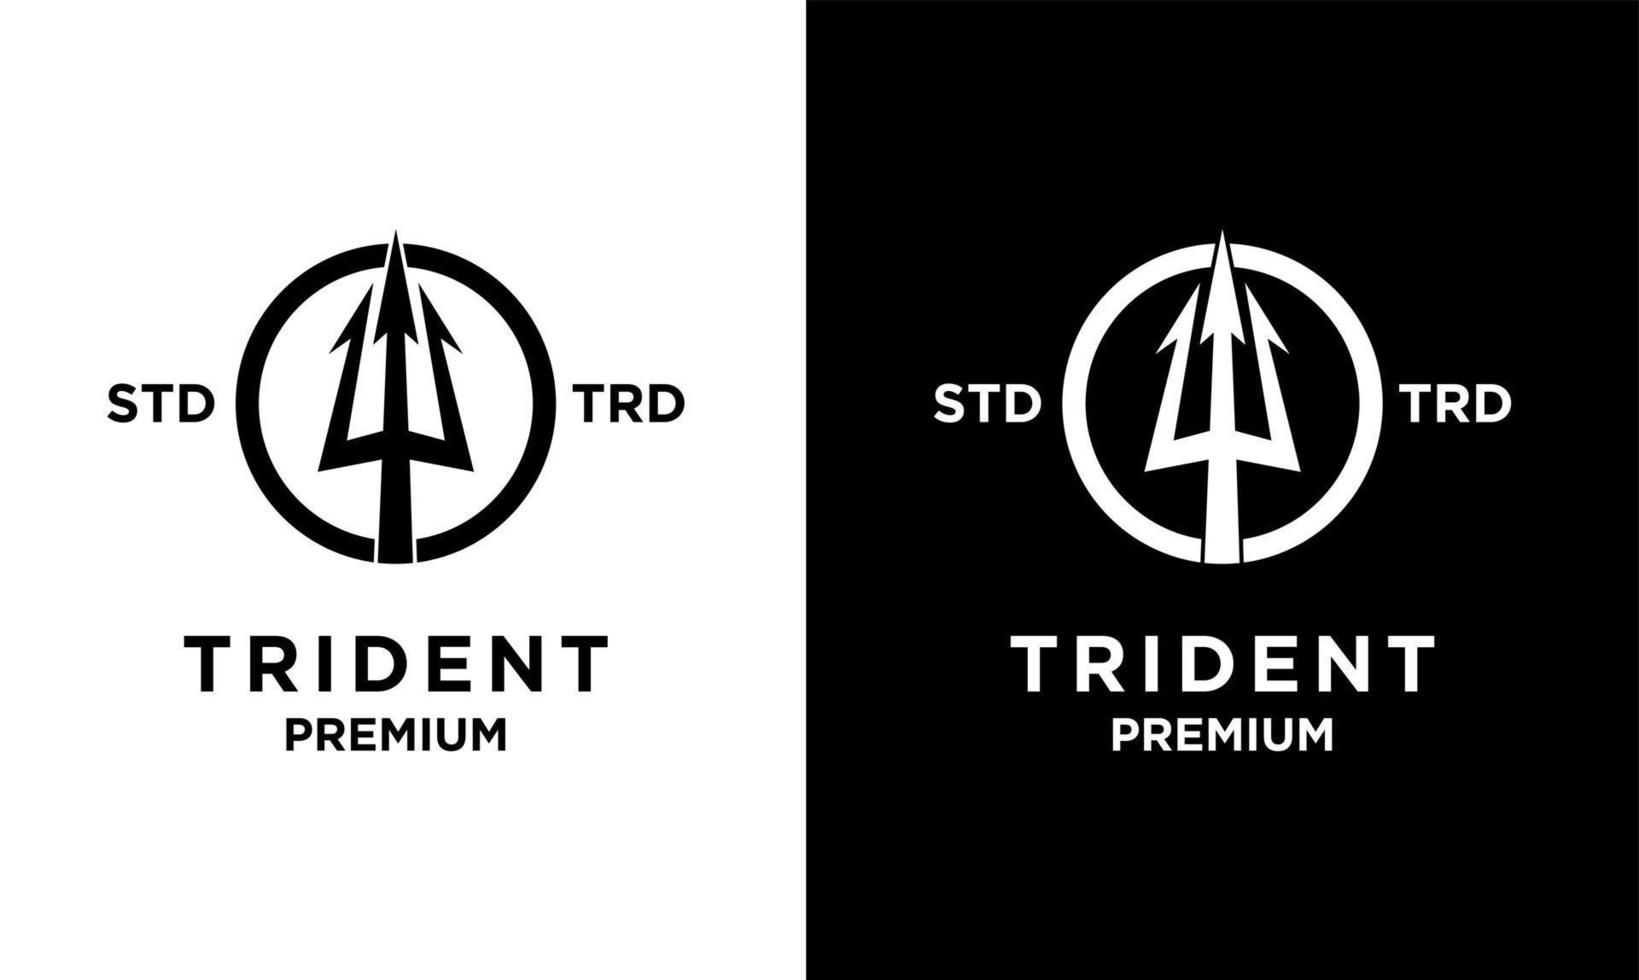 design del logo vintage tridente vettore